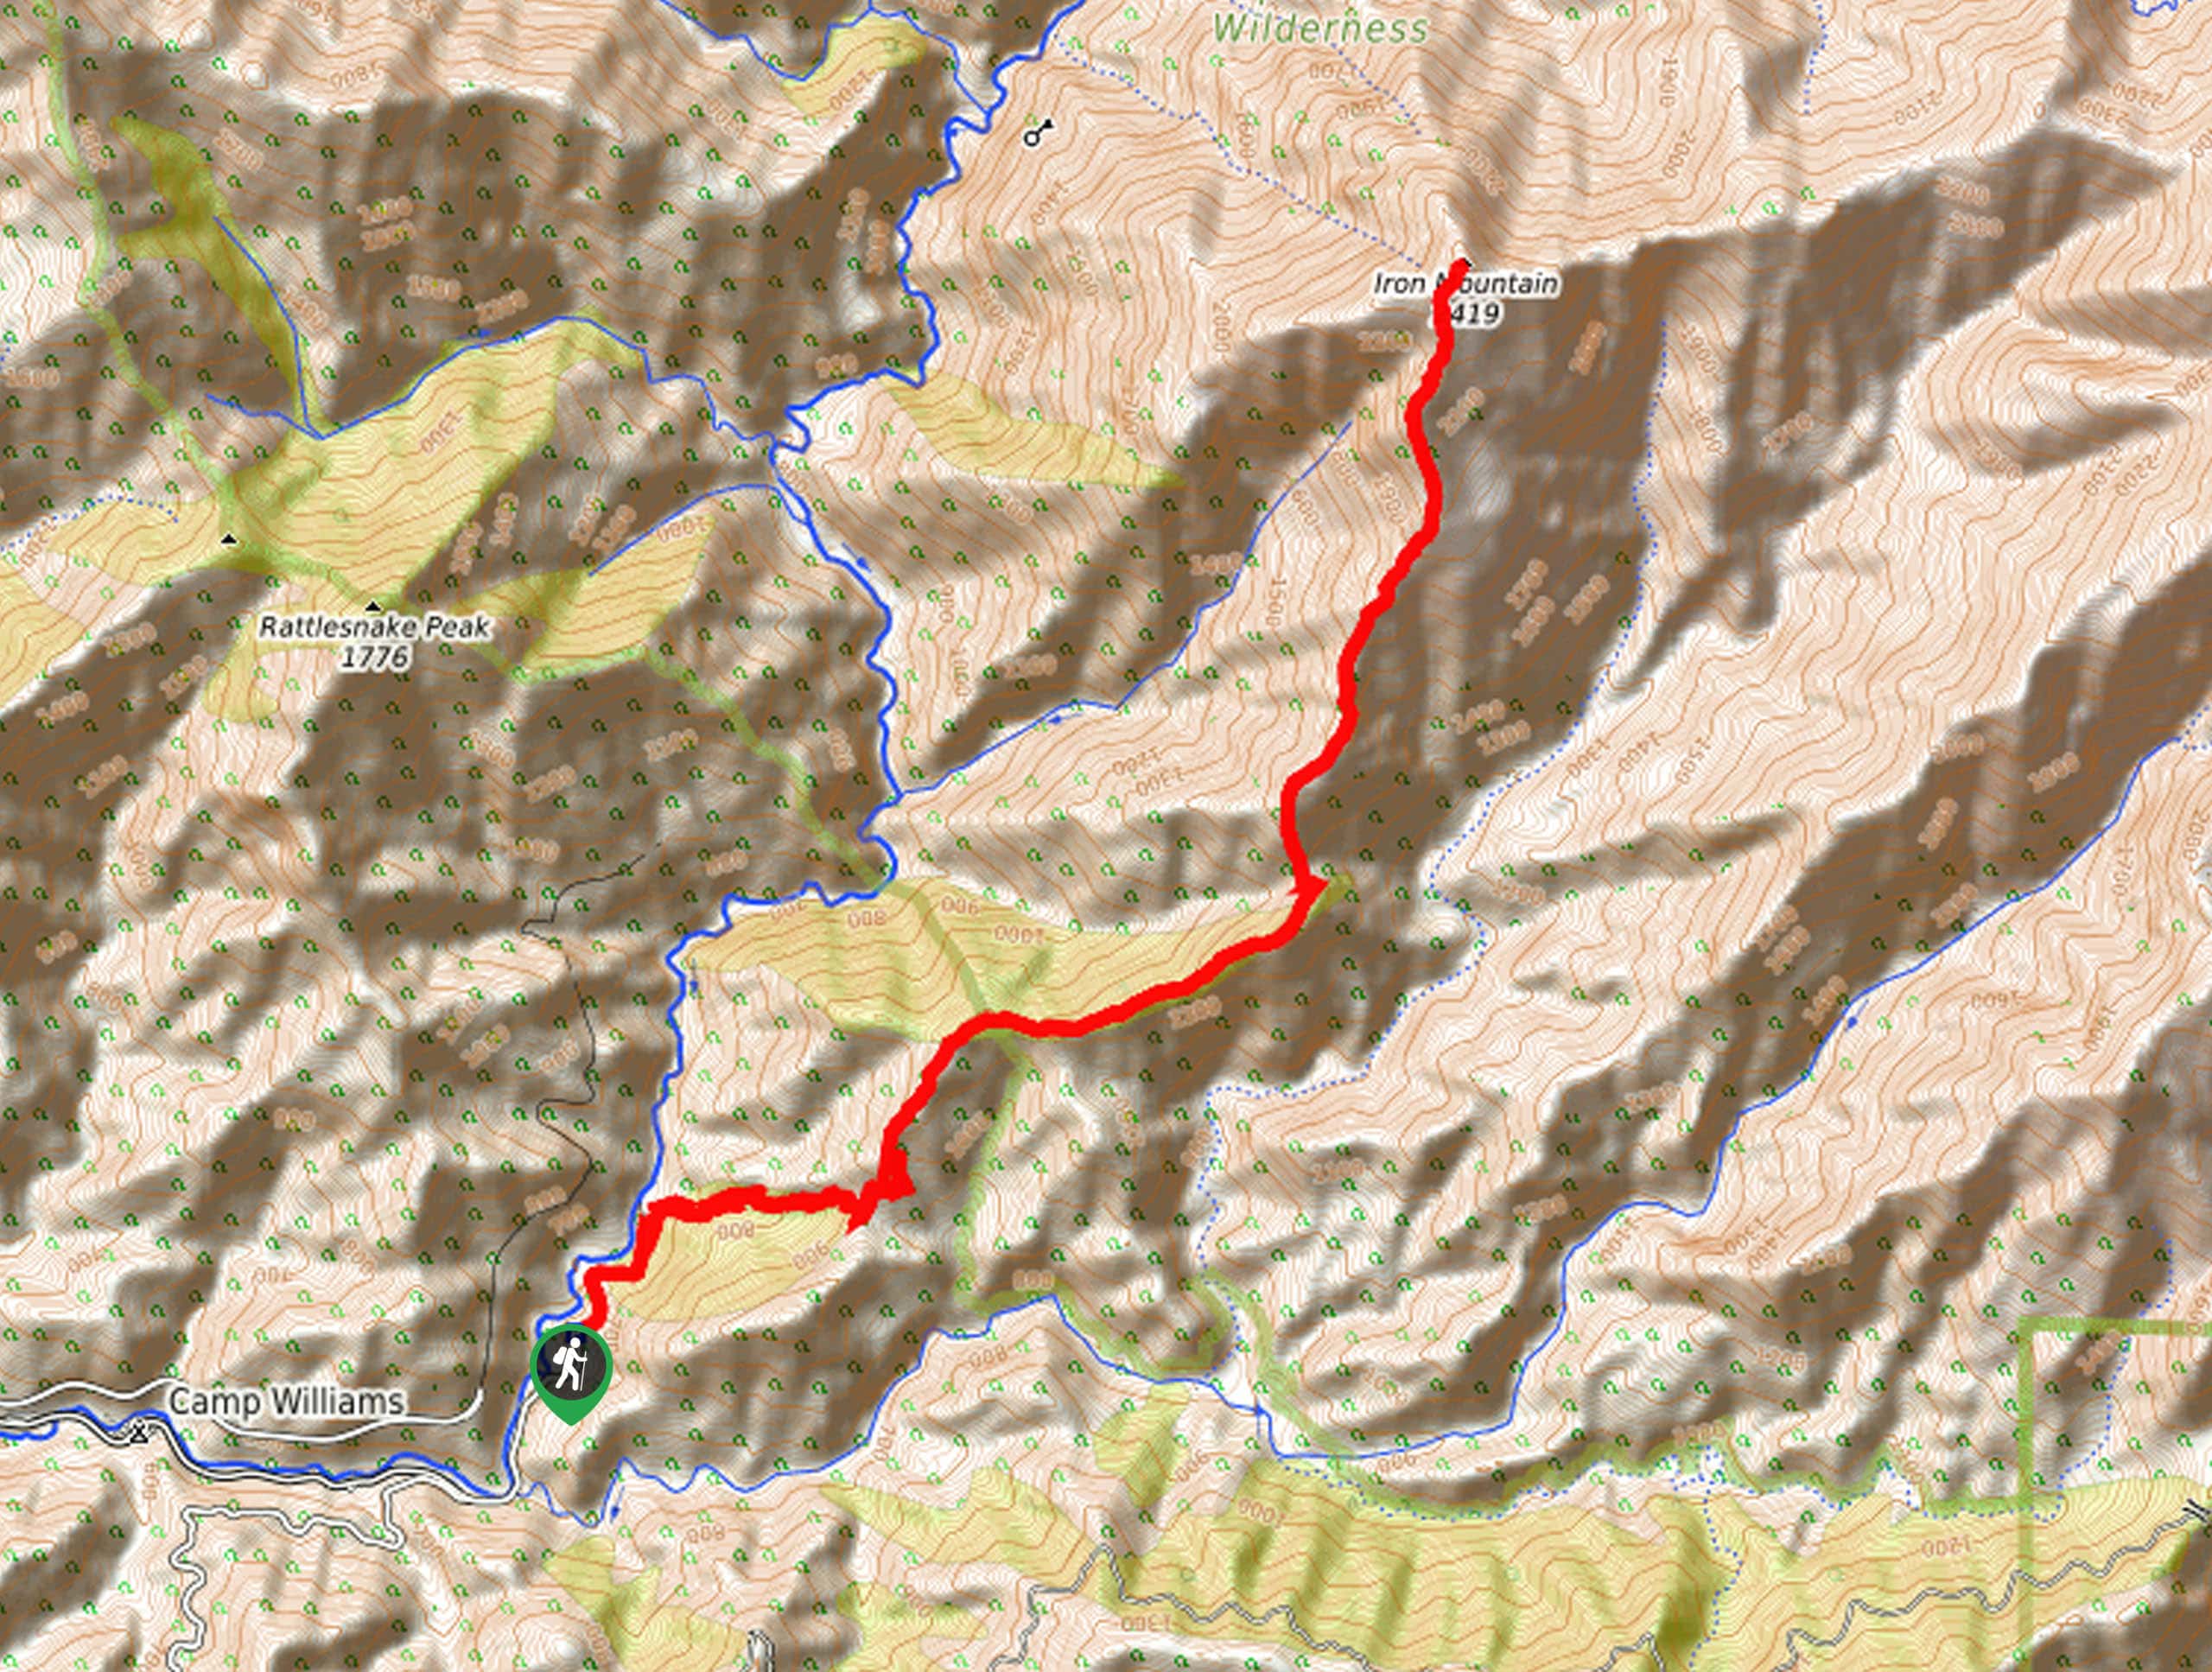 Iron Mountain via Heaton Flats Trail Map